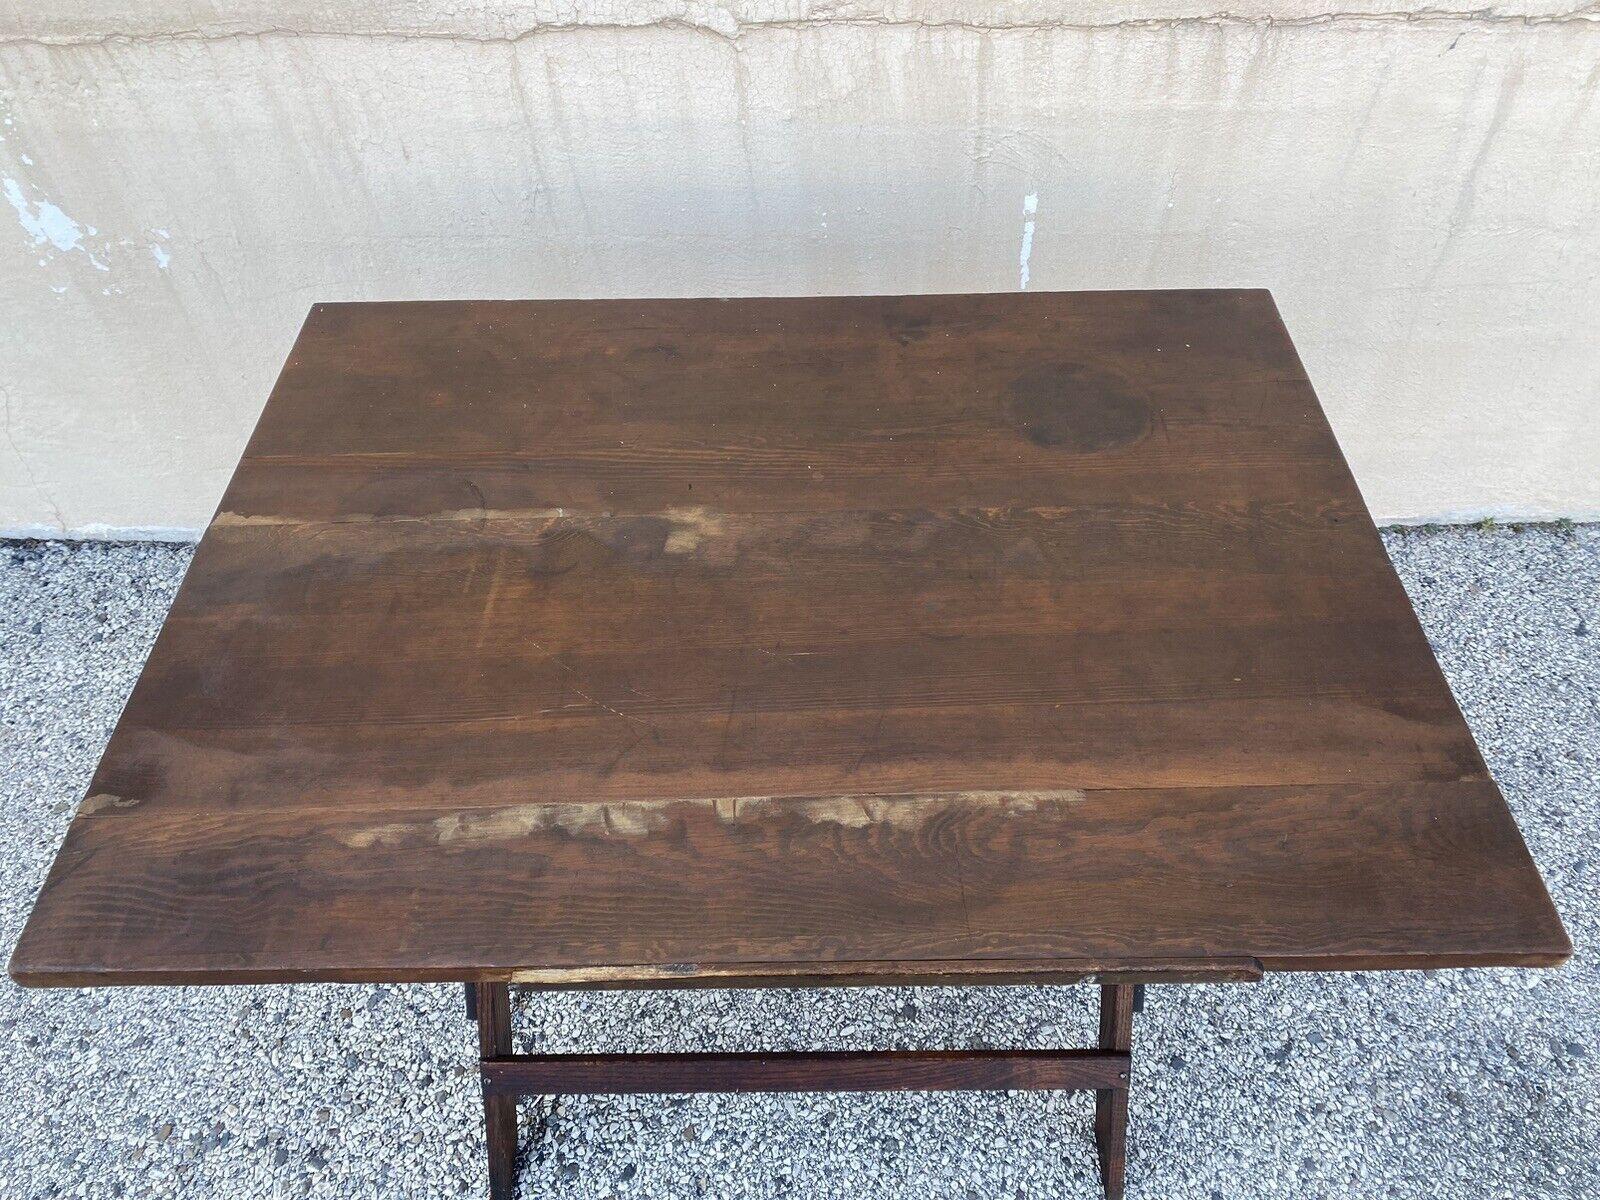 20th Century Vintage Anco Bilt Oak Wood Adjustable Drafting Table Desk Industrial Work Stand